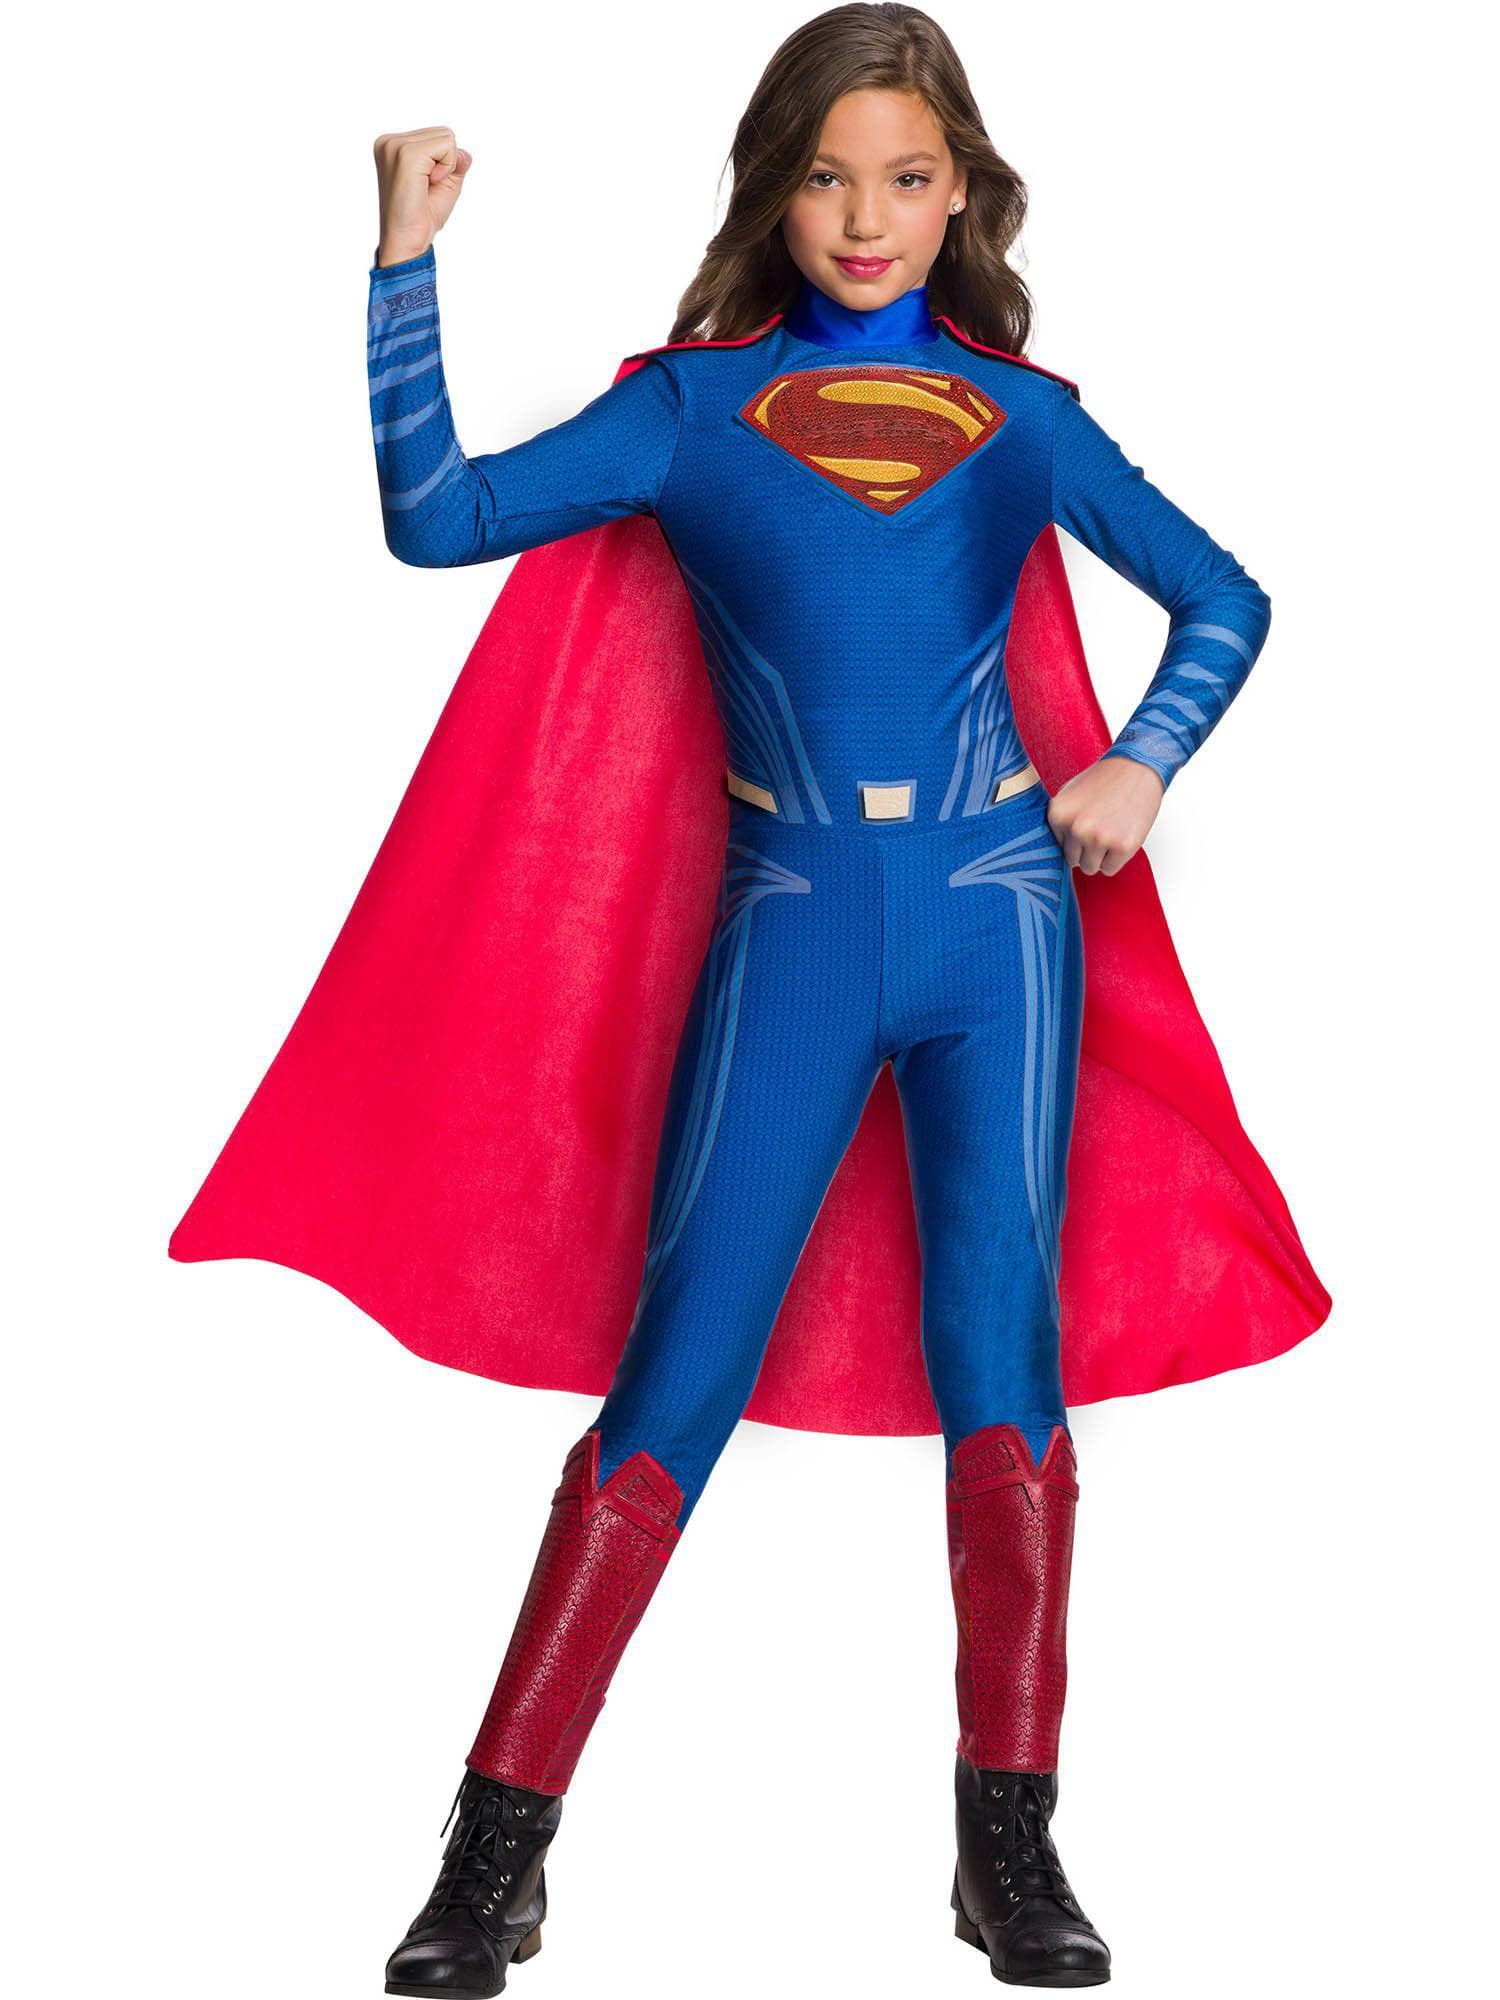 Kids Justice League Superman Costume - costumes.com